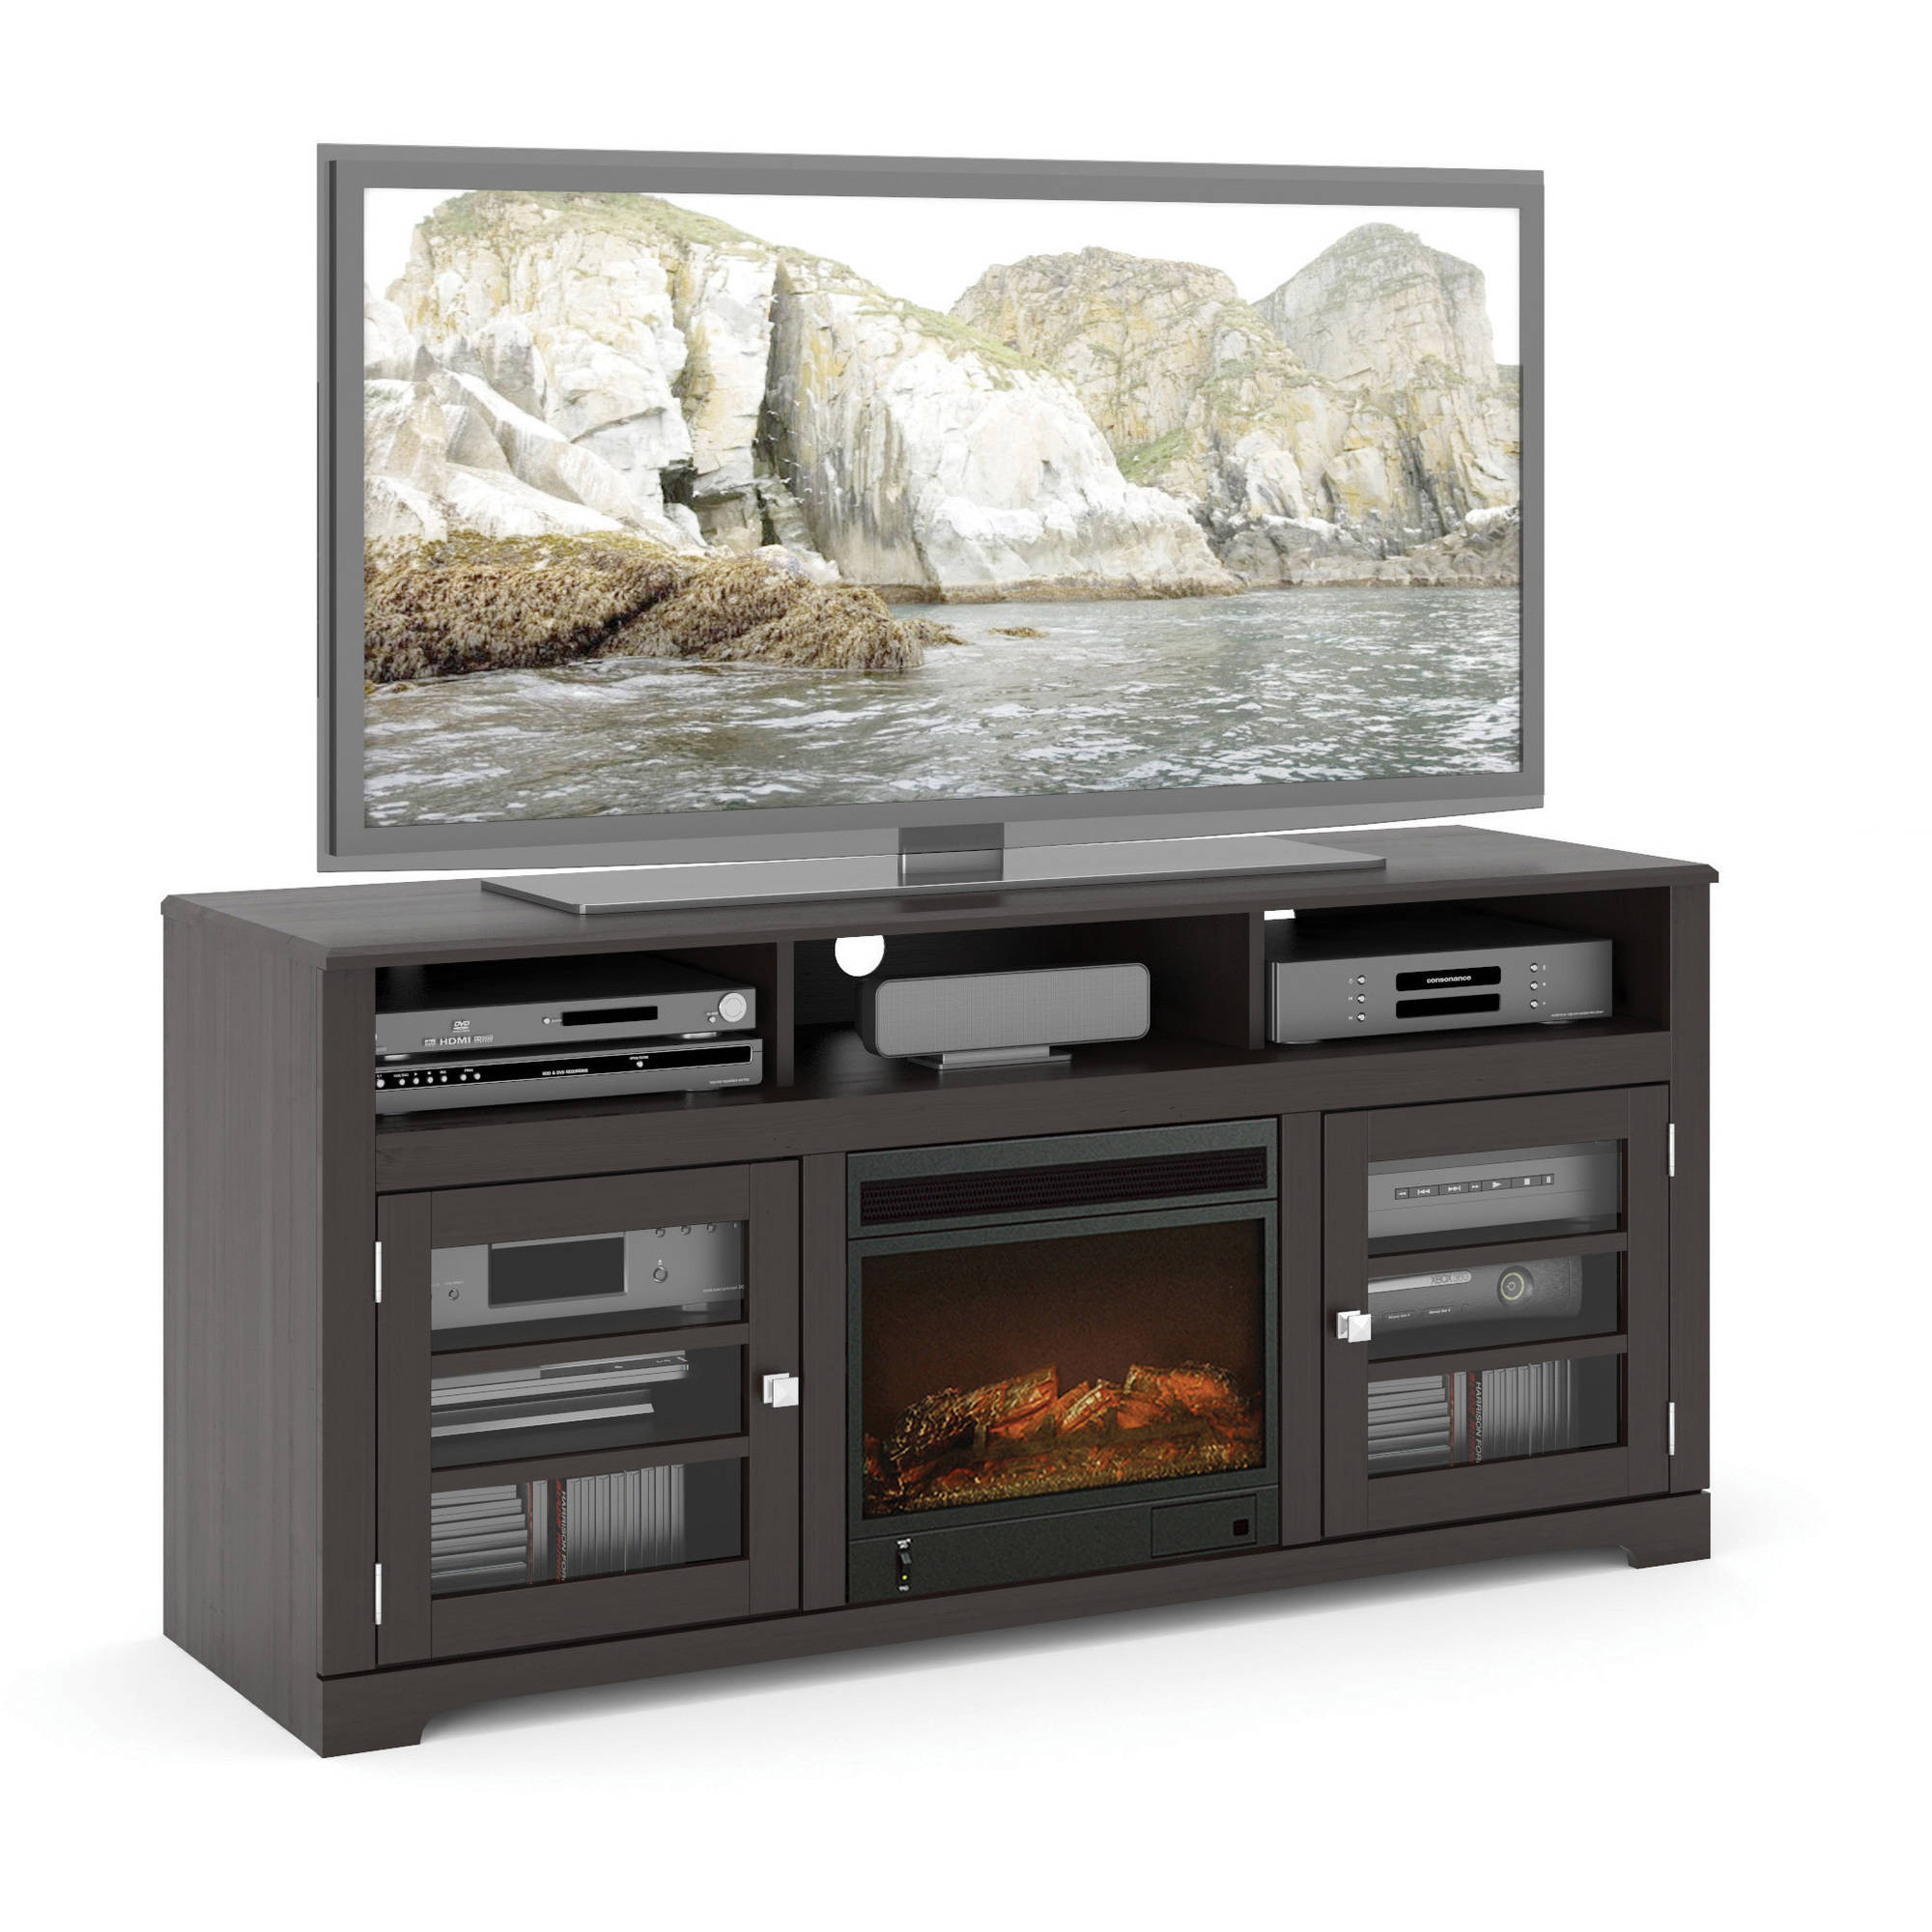 Best ideas about Fireplace Tv Stand Walmart
. Save or Pin Electric Fireplace TV Stands Walmart Now.